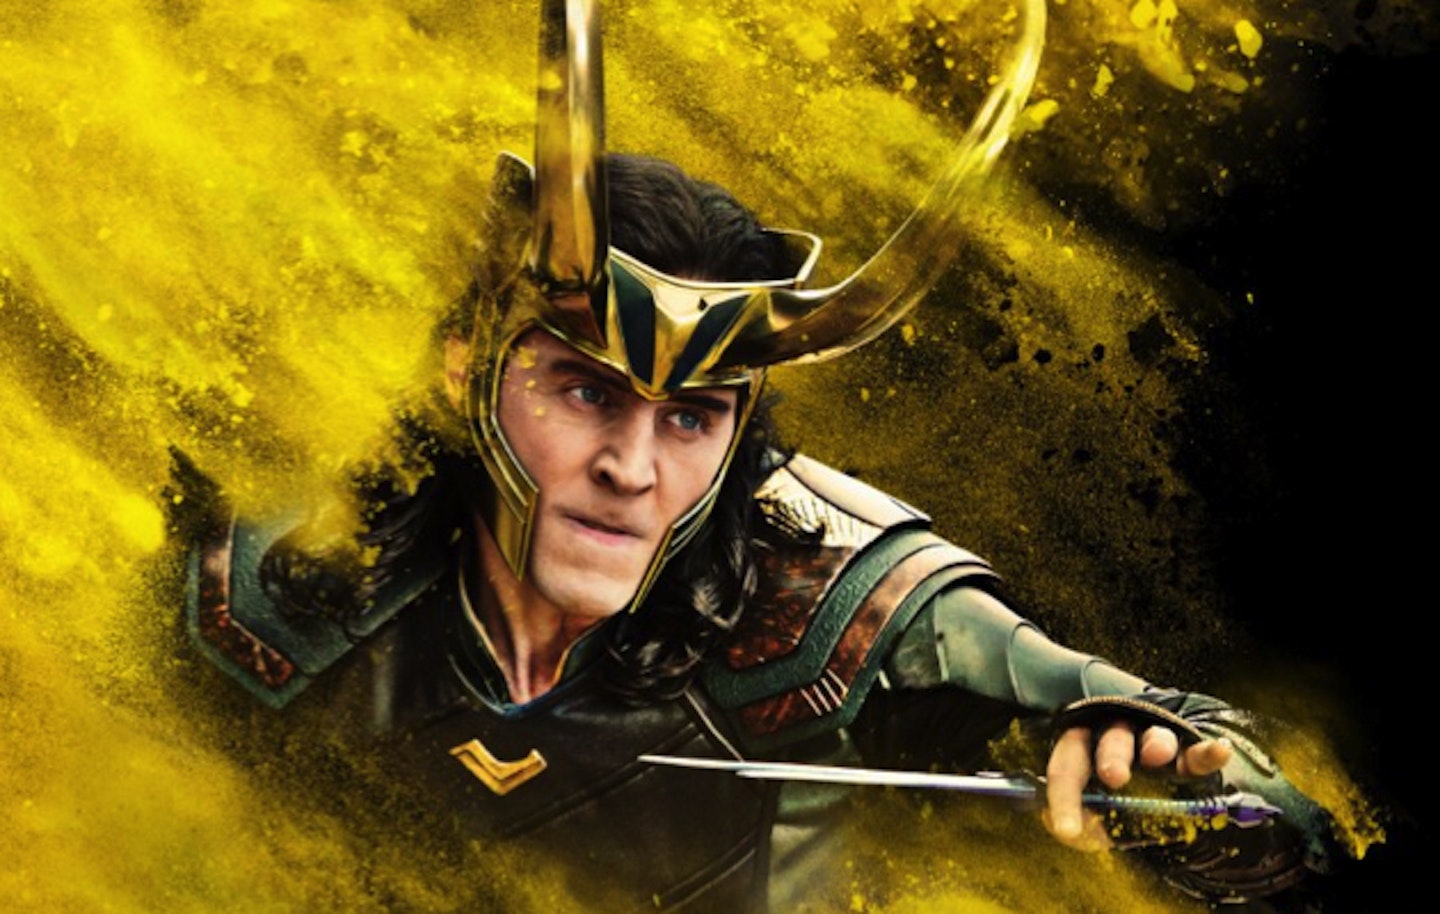 Loki Thor: Ragnarok character poster grab